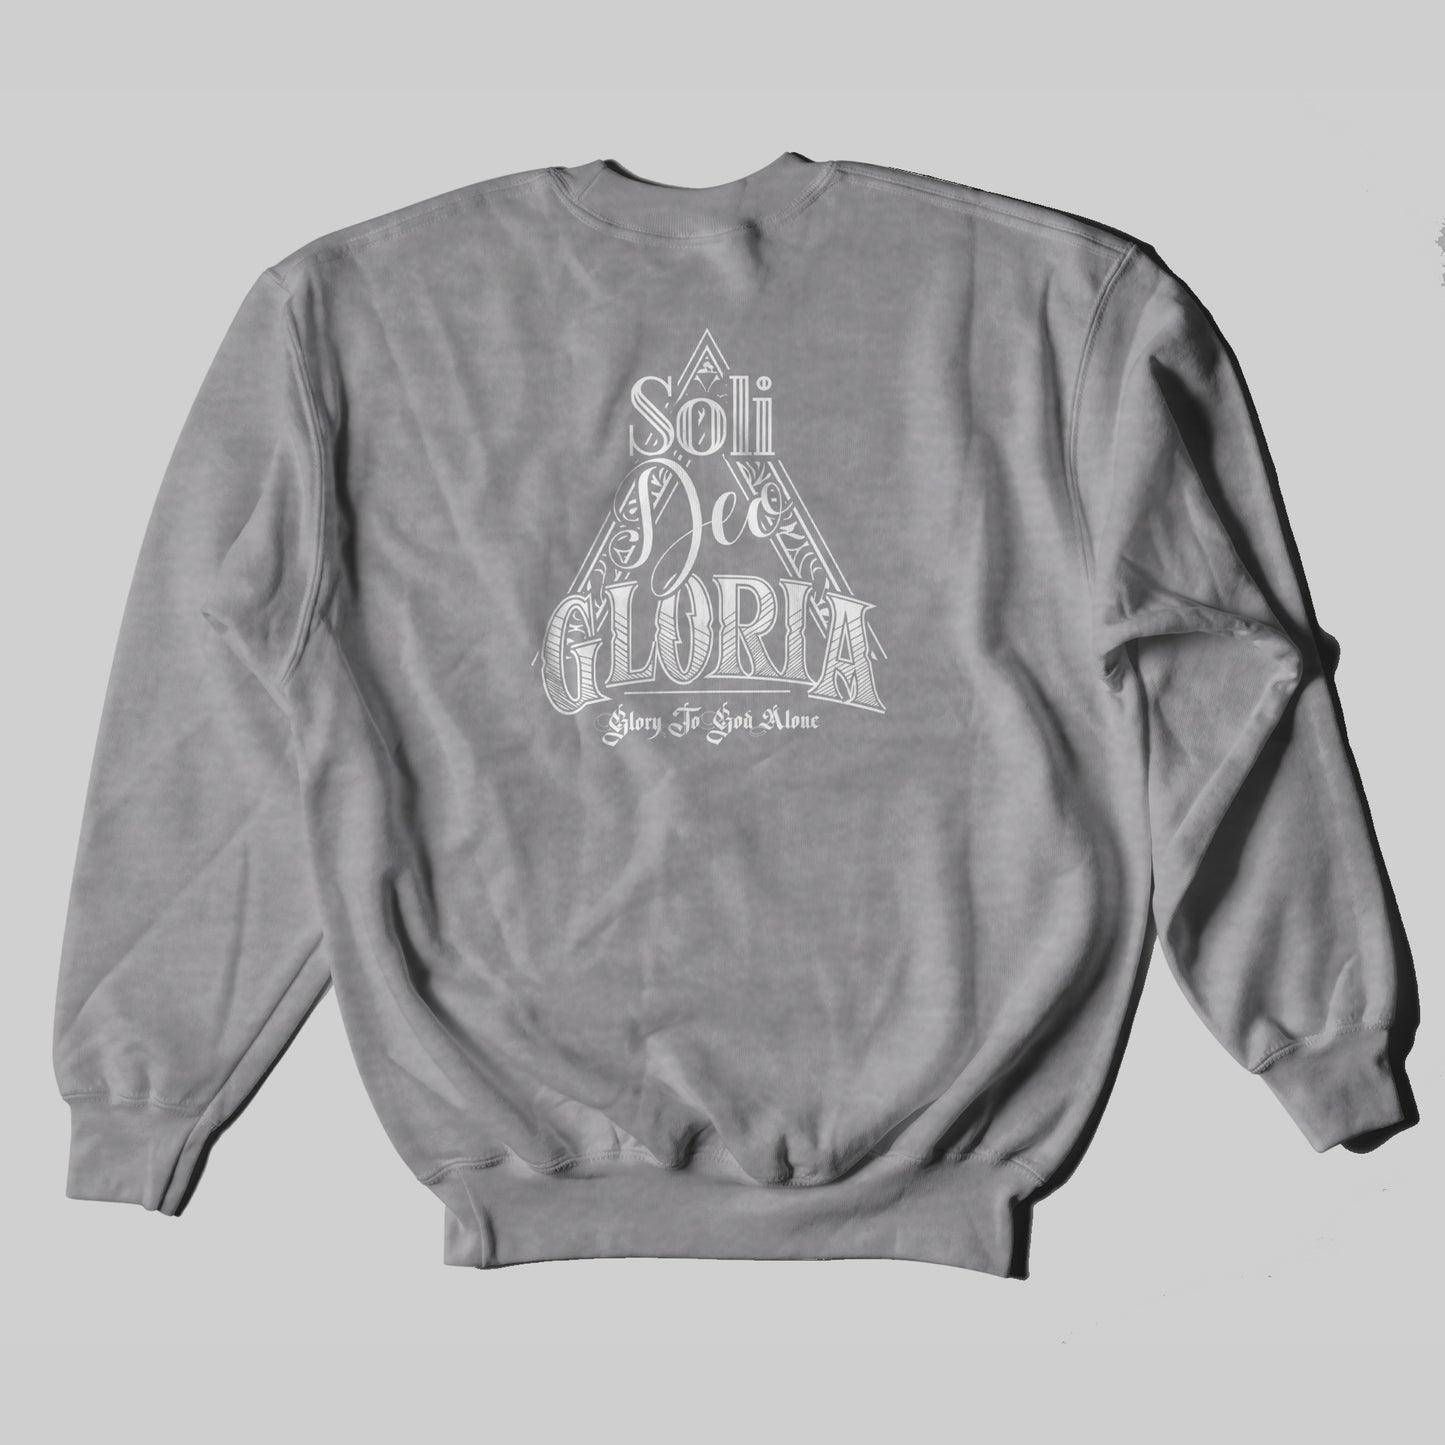 Soli Deo Gloria - Sweatshirt